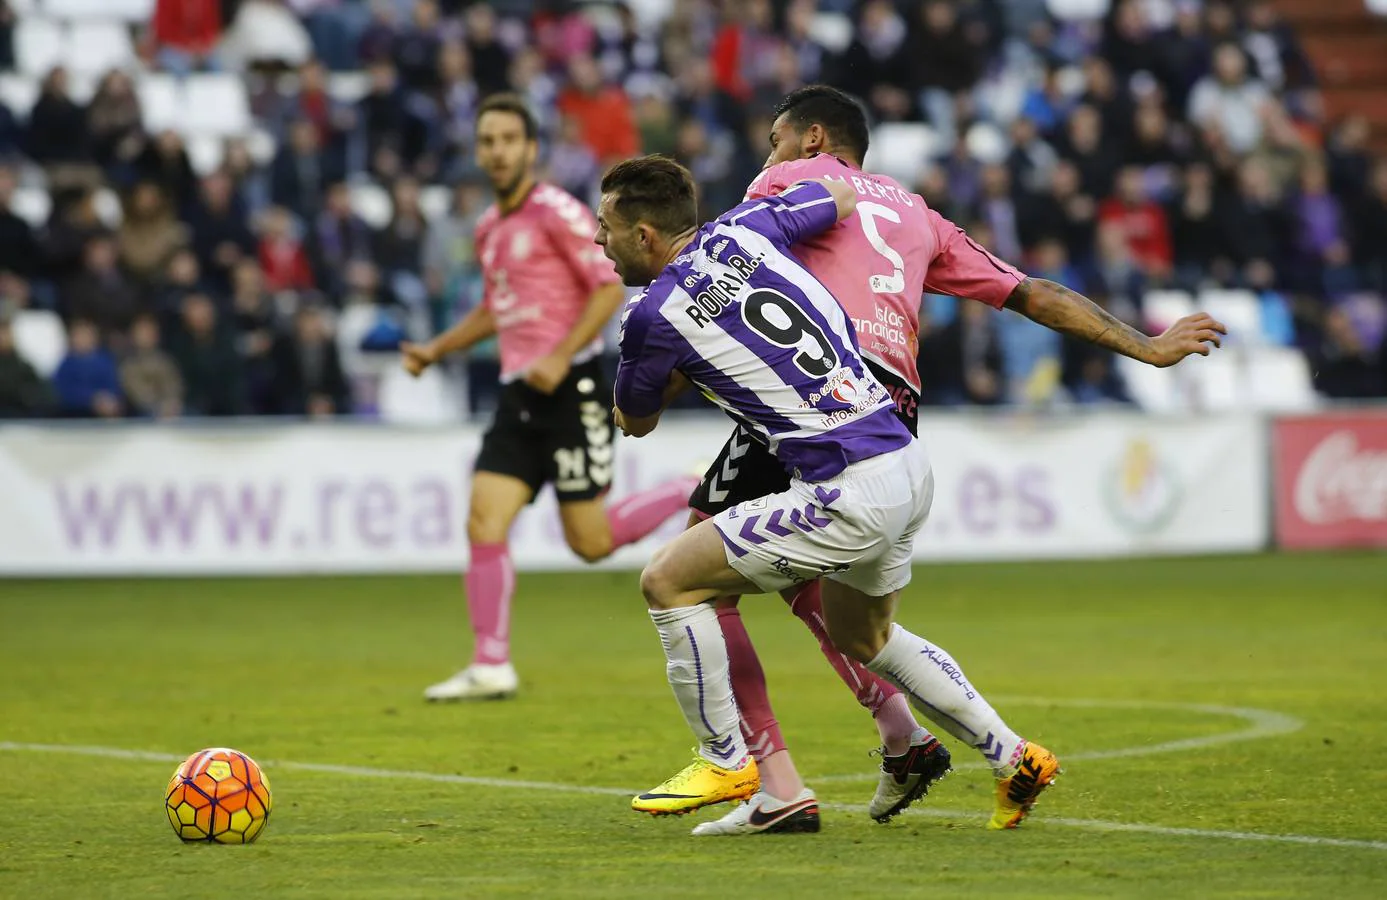 Real Valladolid 4-1 Tenerife (1/2)